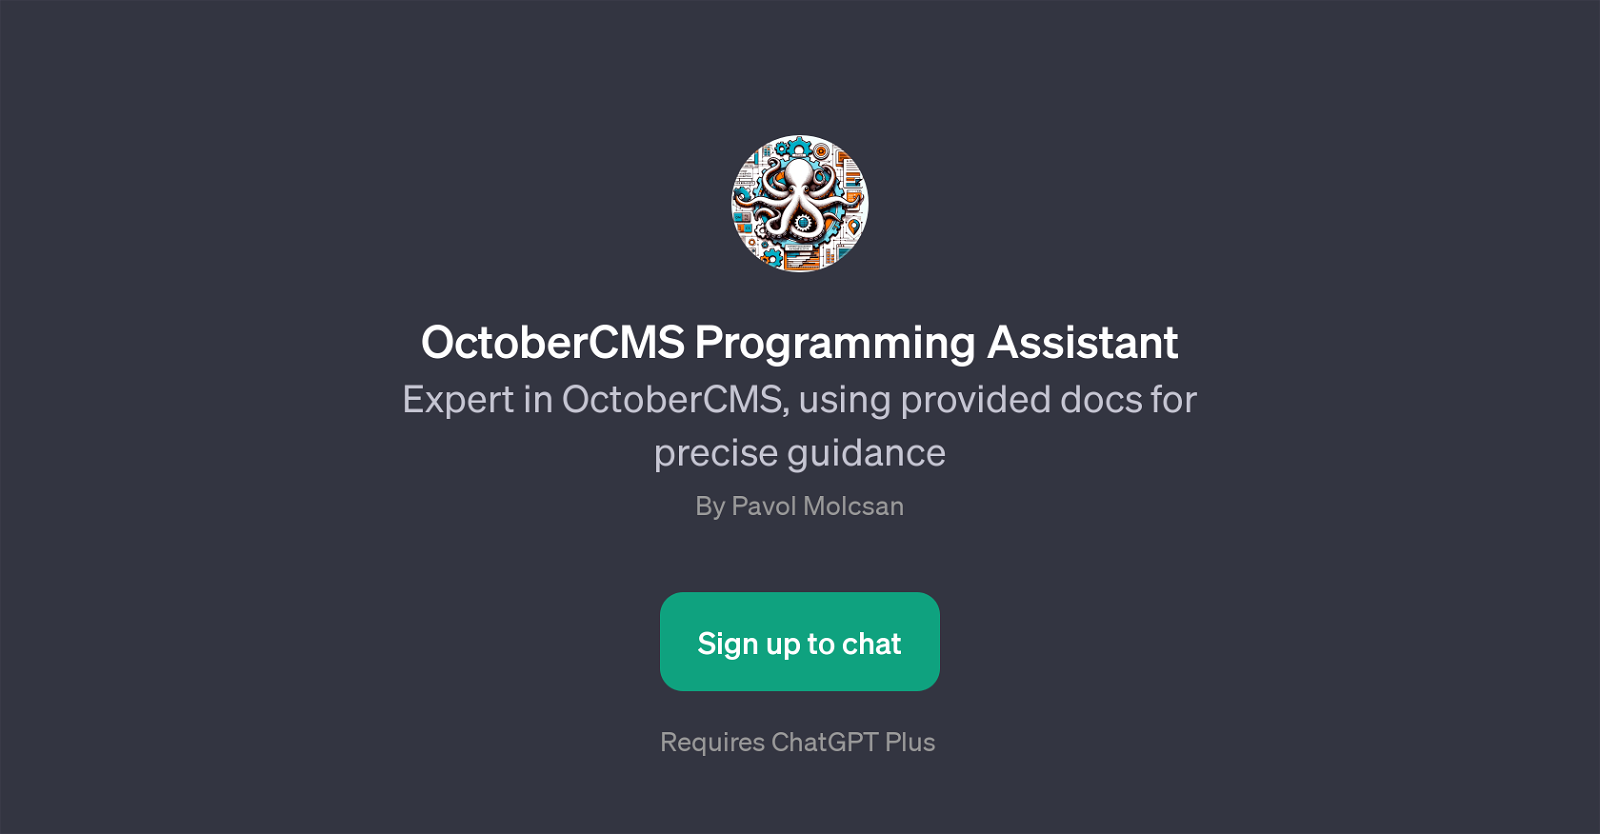 OctoberCMS Programming Assistant website